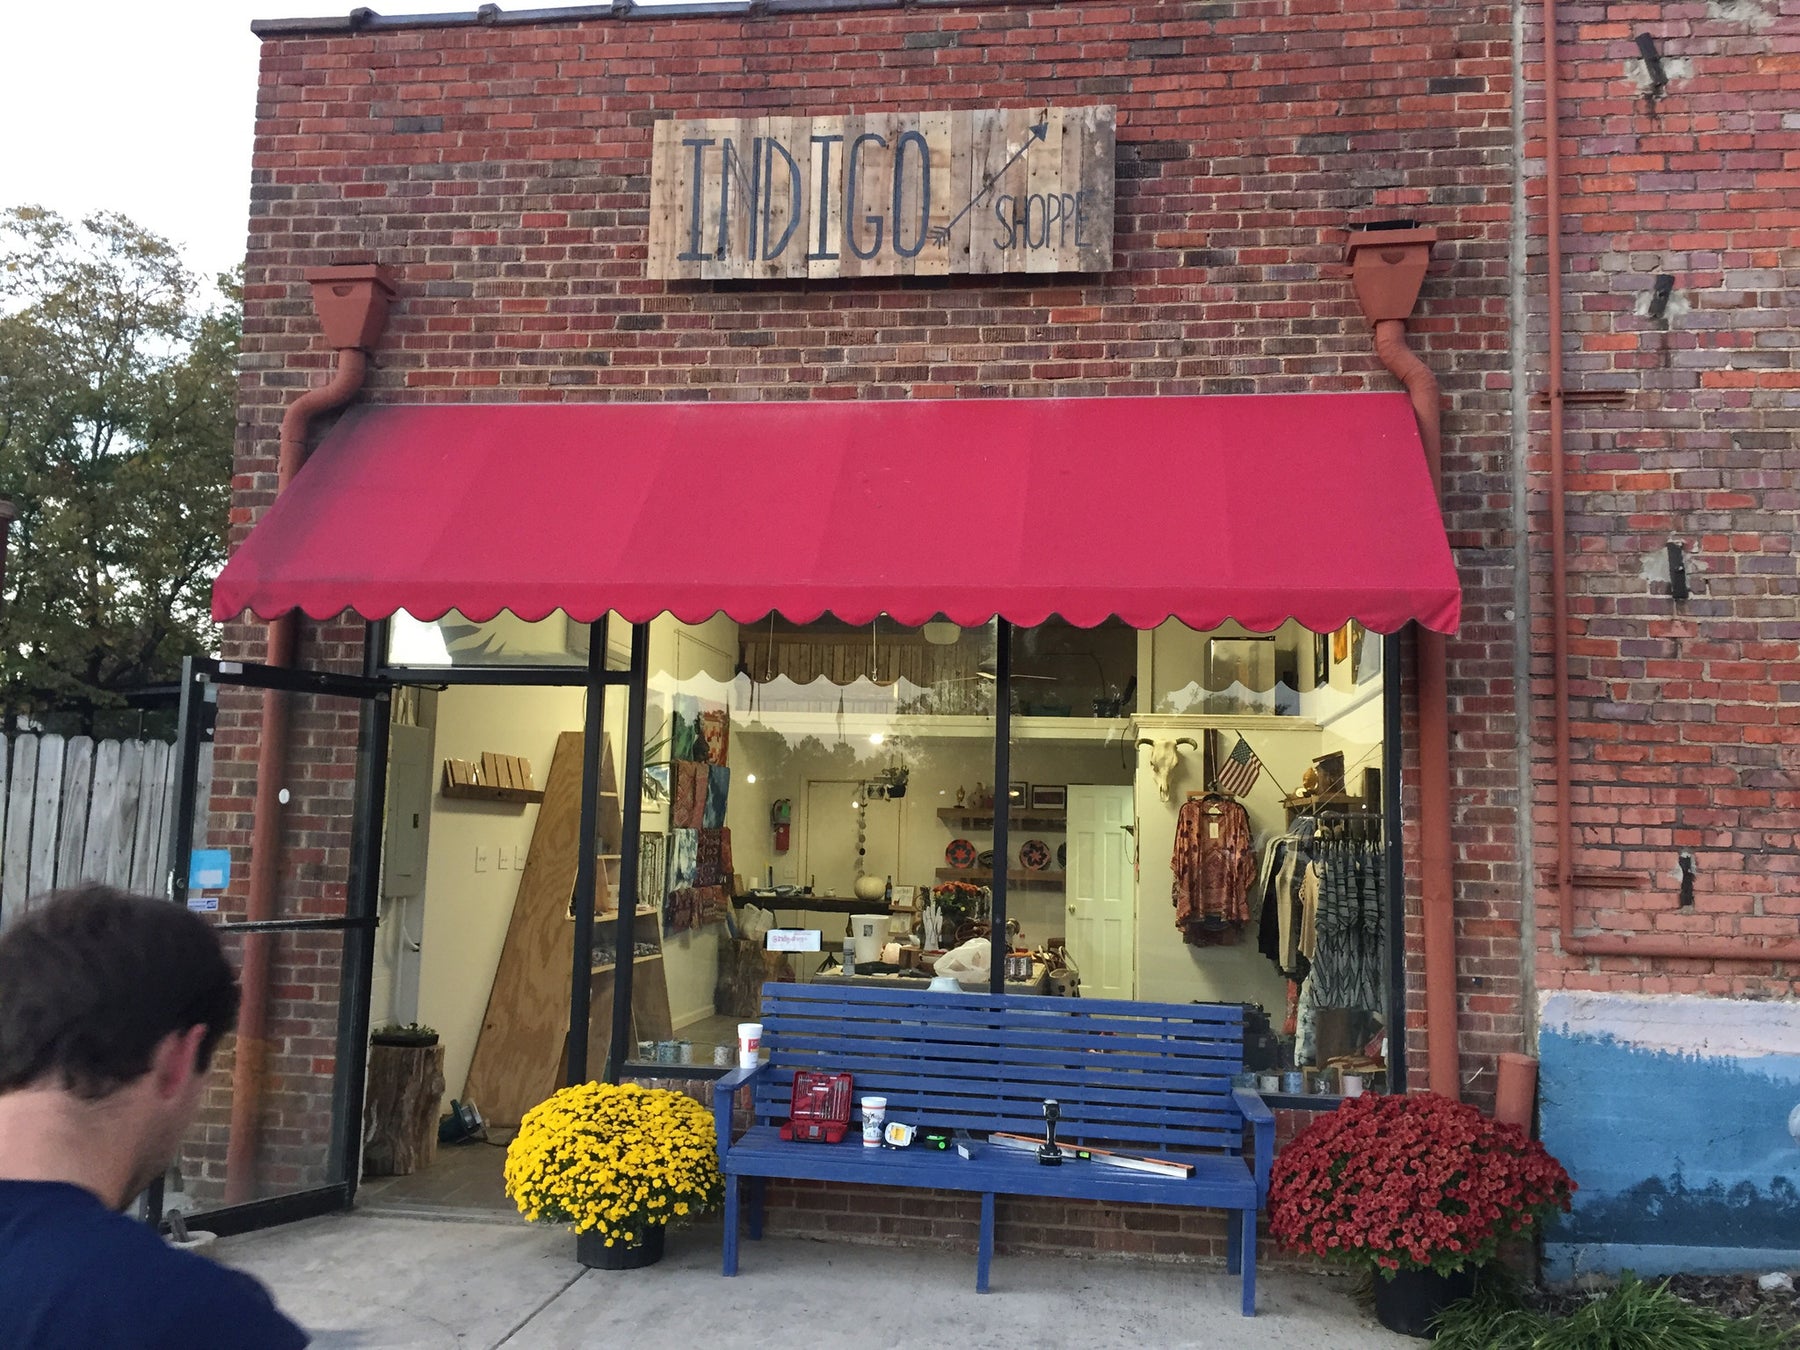 New Stockist - The Indigo Shoppe - Huntsville, AL